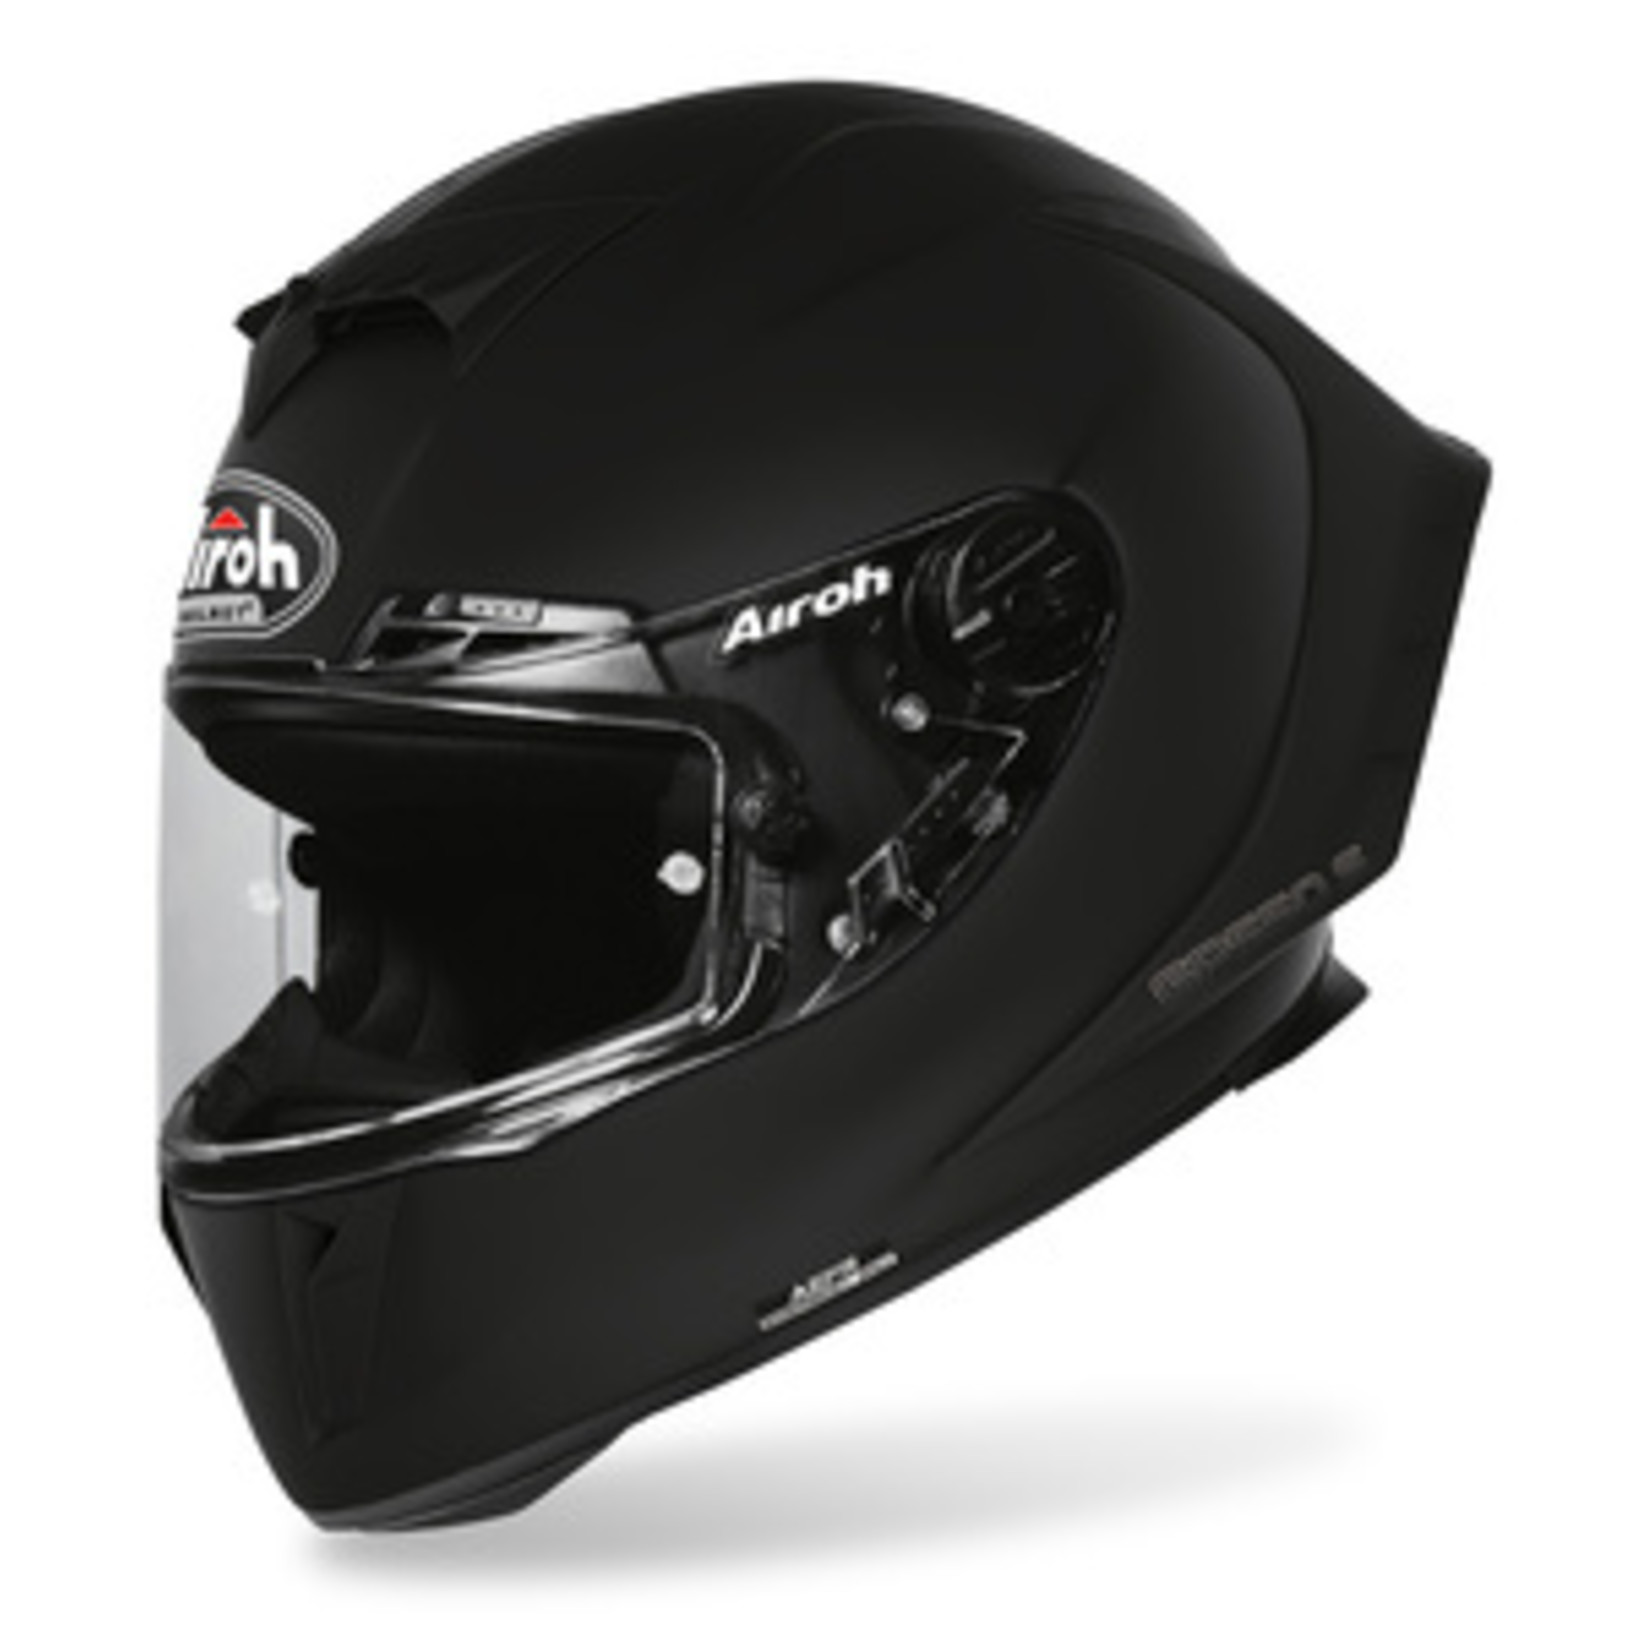 Airoh Airoh Helmet GP550 S Color black Matt